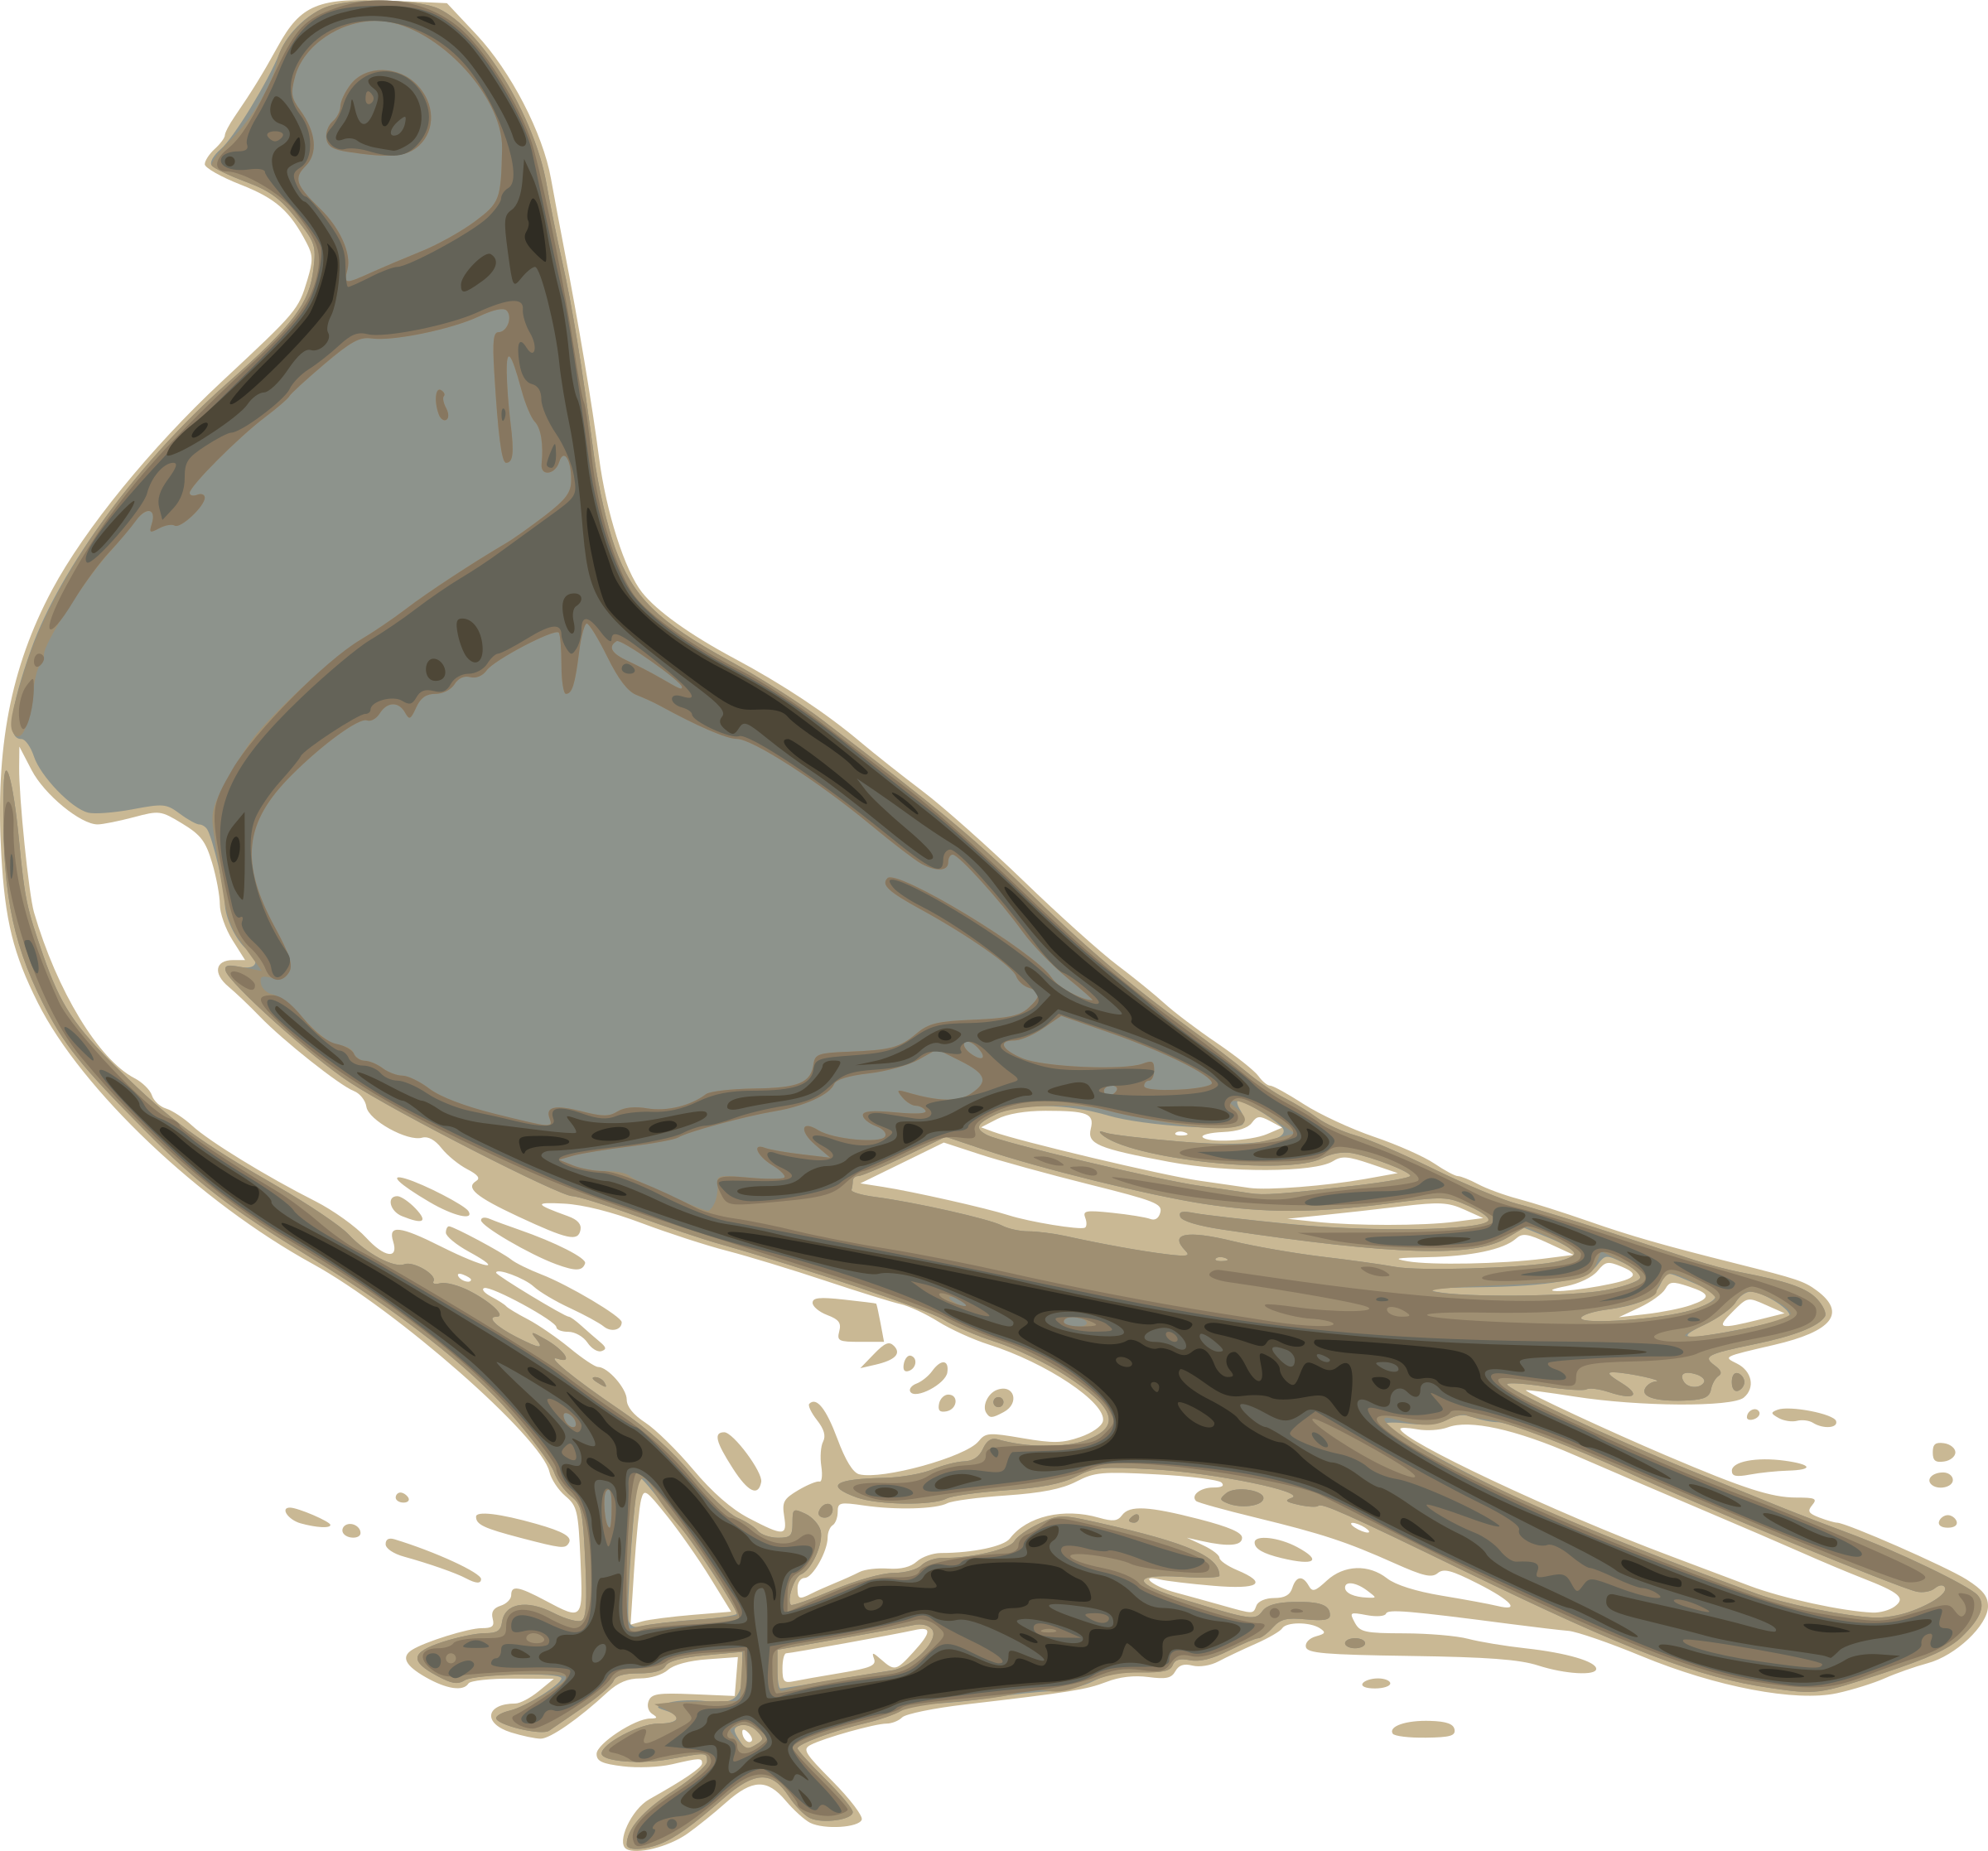 Big Image - Pigeon Illustration (2400x2235)